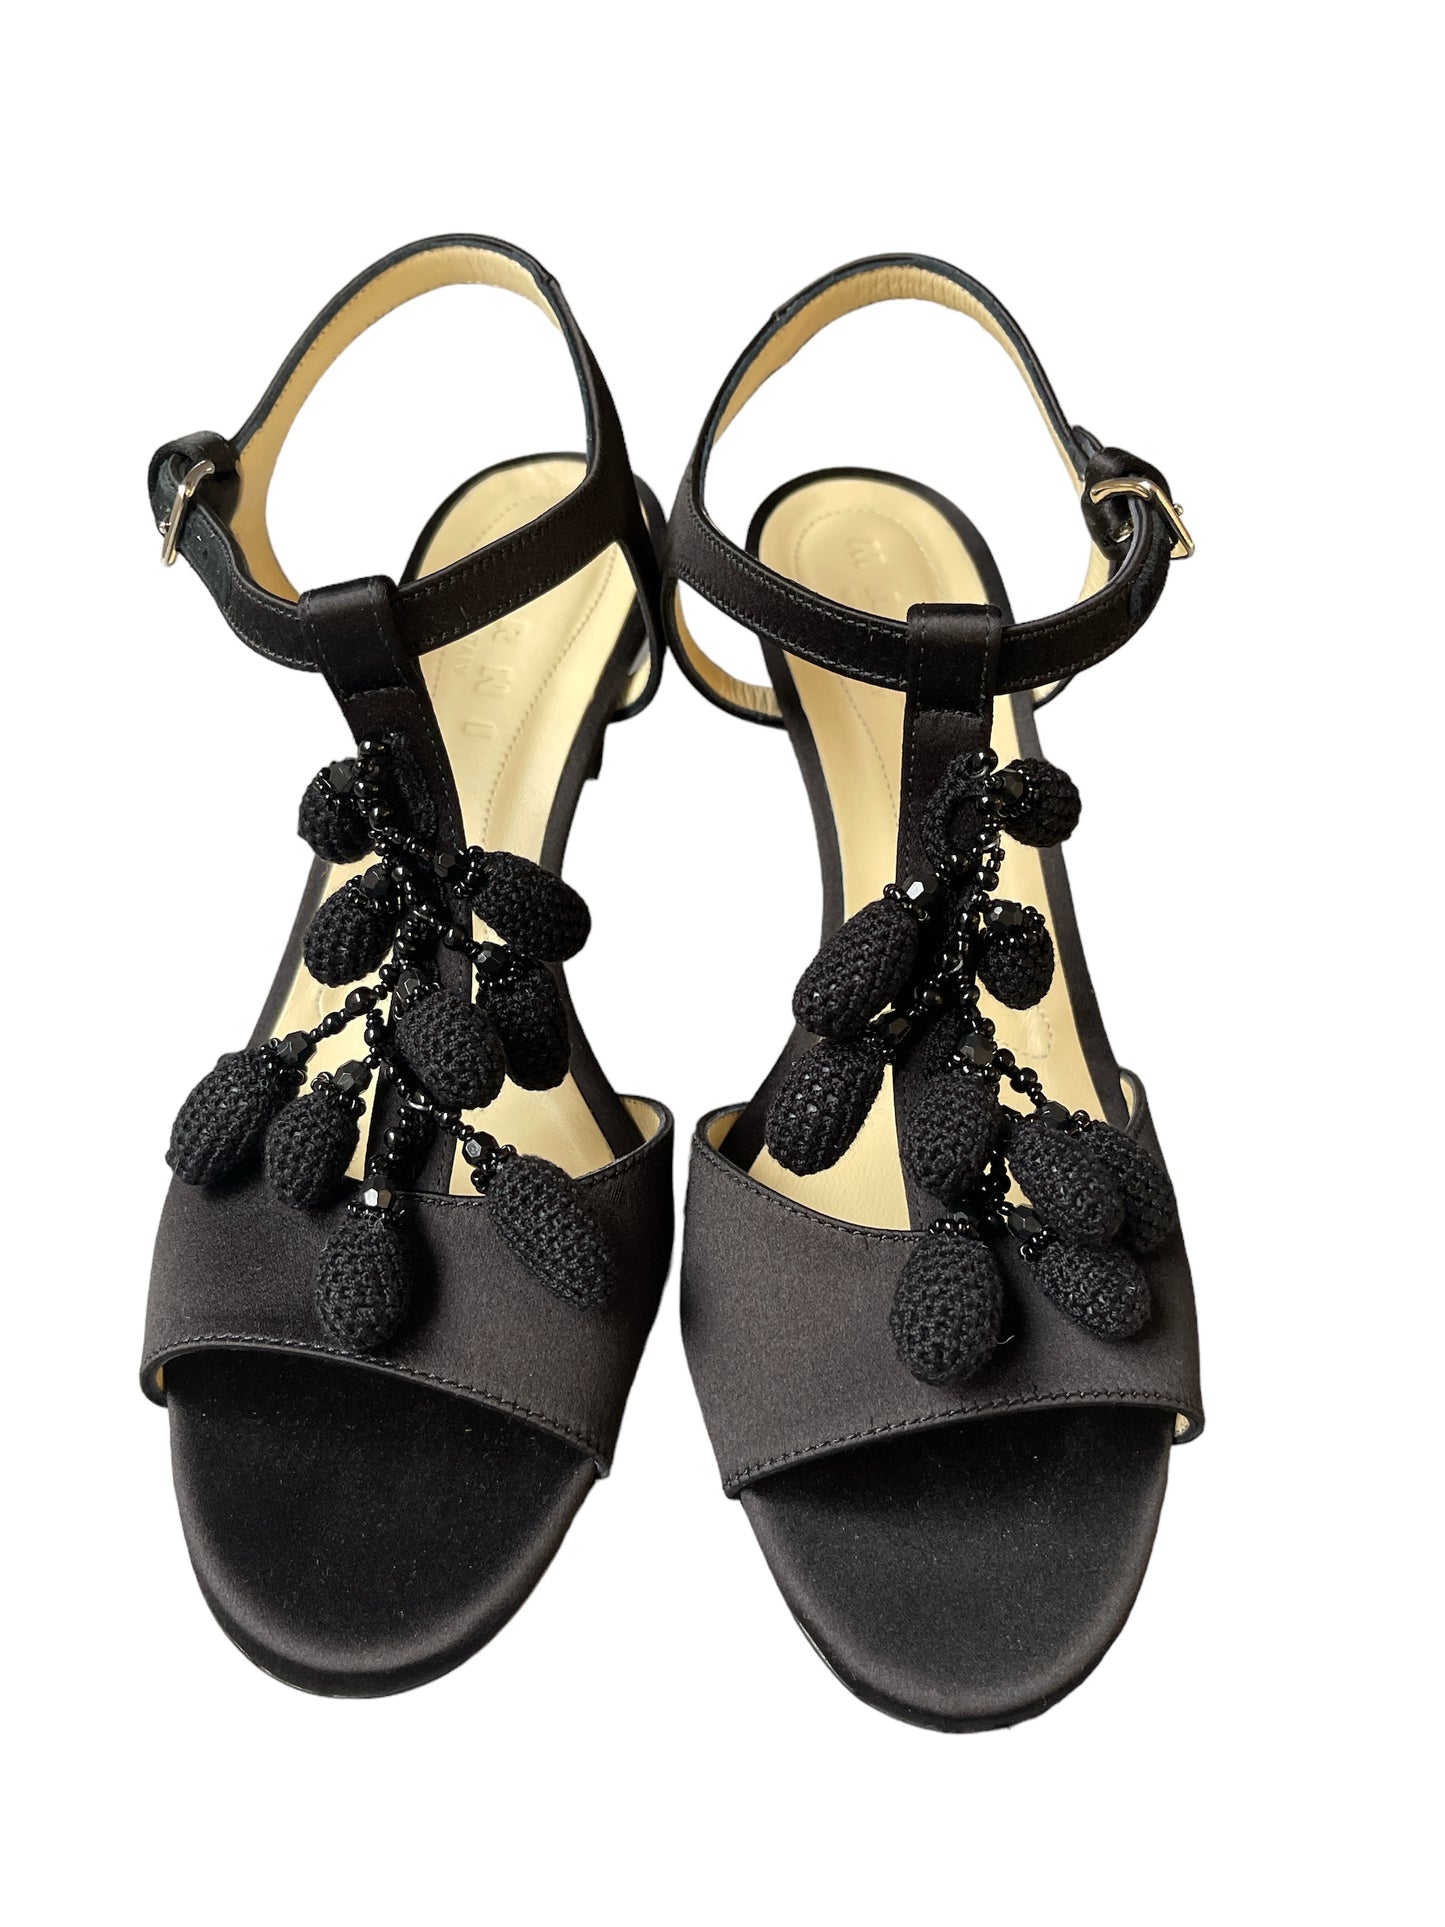 Marni Black Beaded Detailed Sandals Size 38